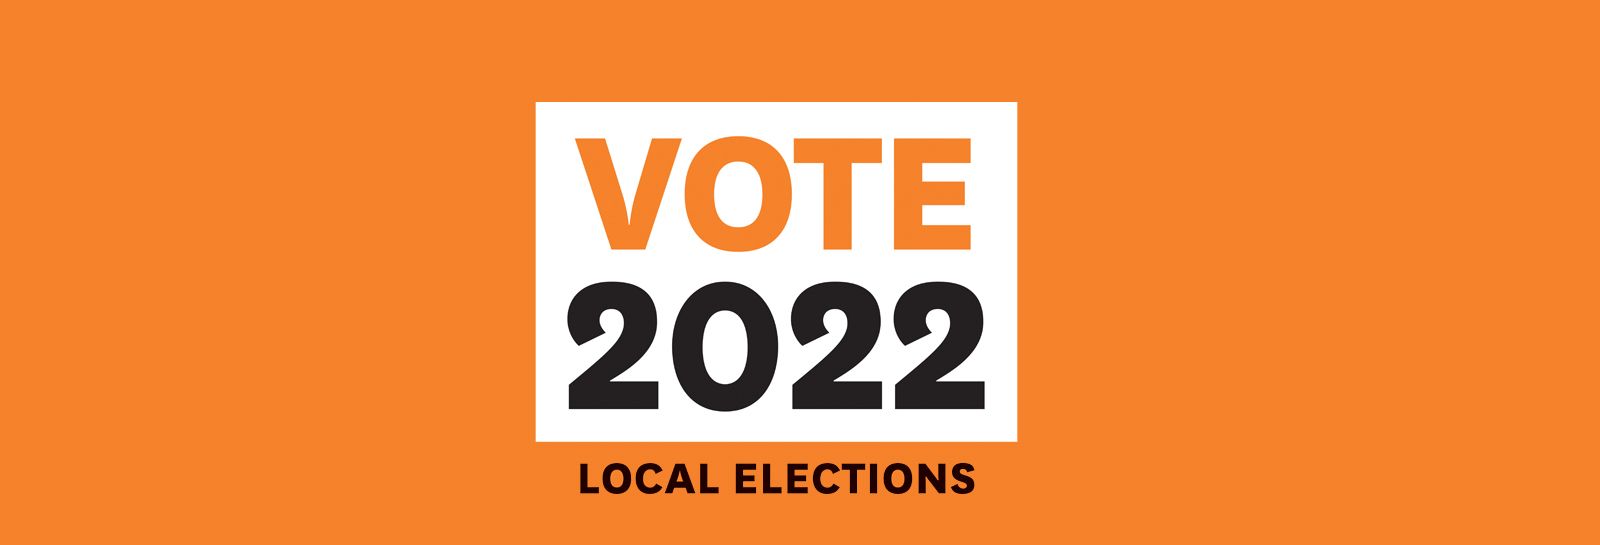 Vote 2022 banner image